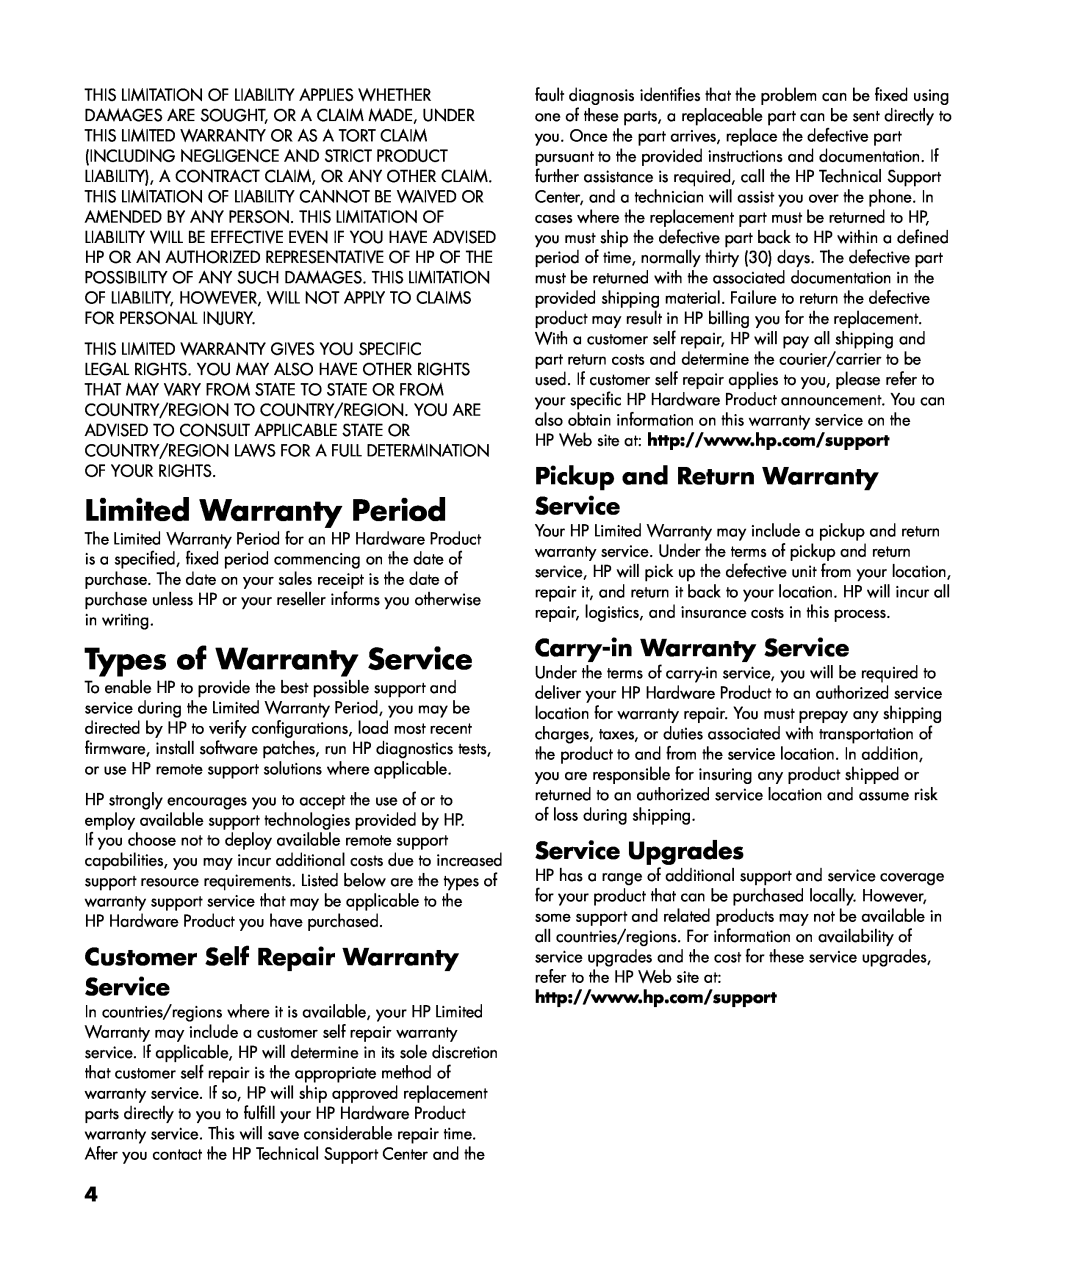 HP a1748x Limited Warranty Period, Types of Warranty Service, Customer Self Repair Warranty Service, Service Upgrades 